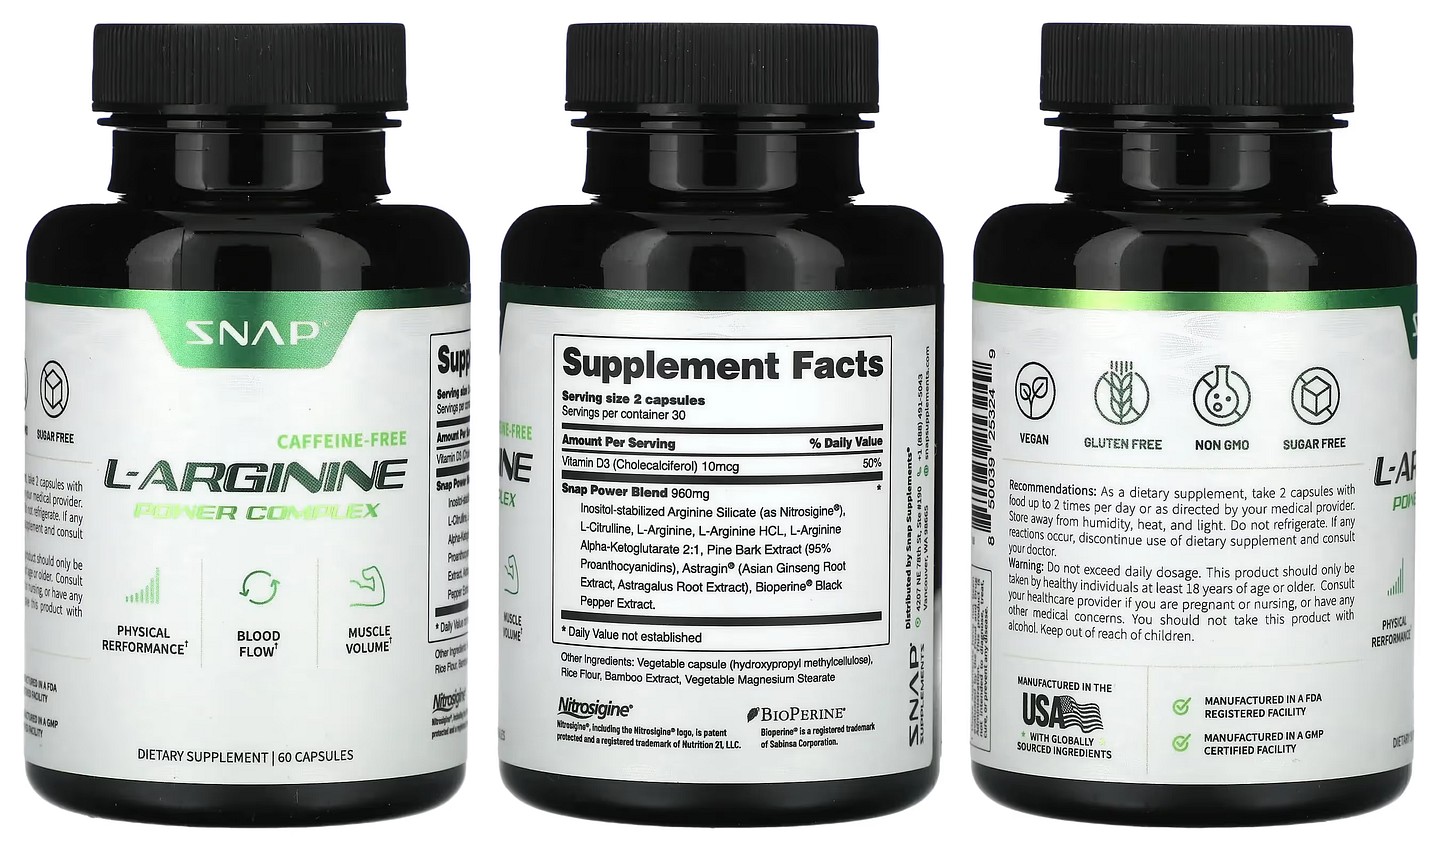 Snap Supplements, L-Arginine packaging